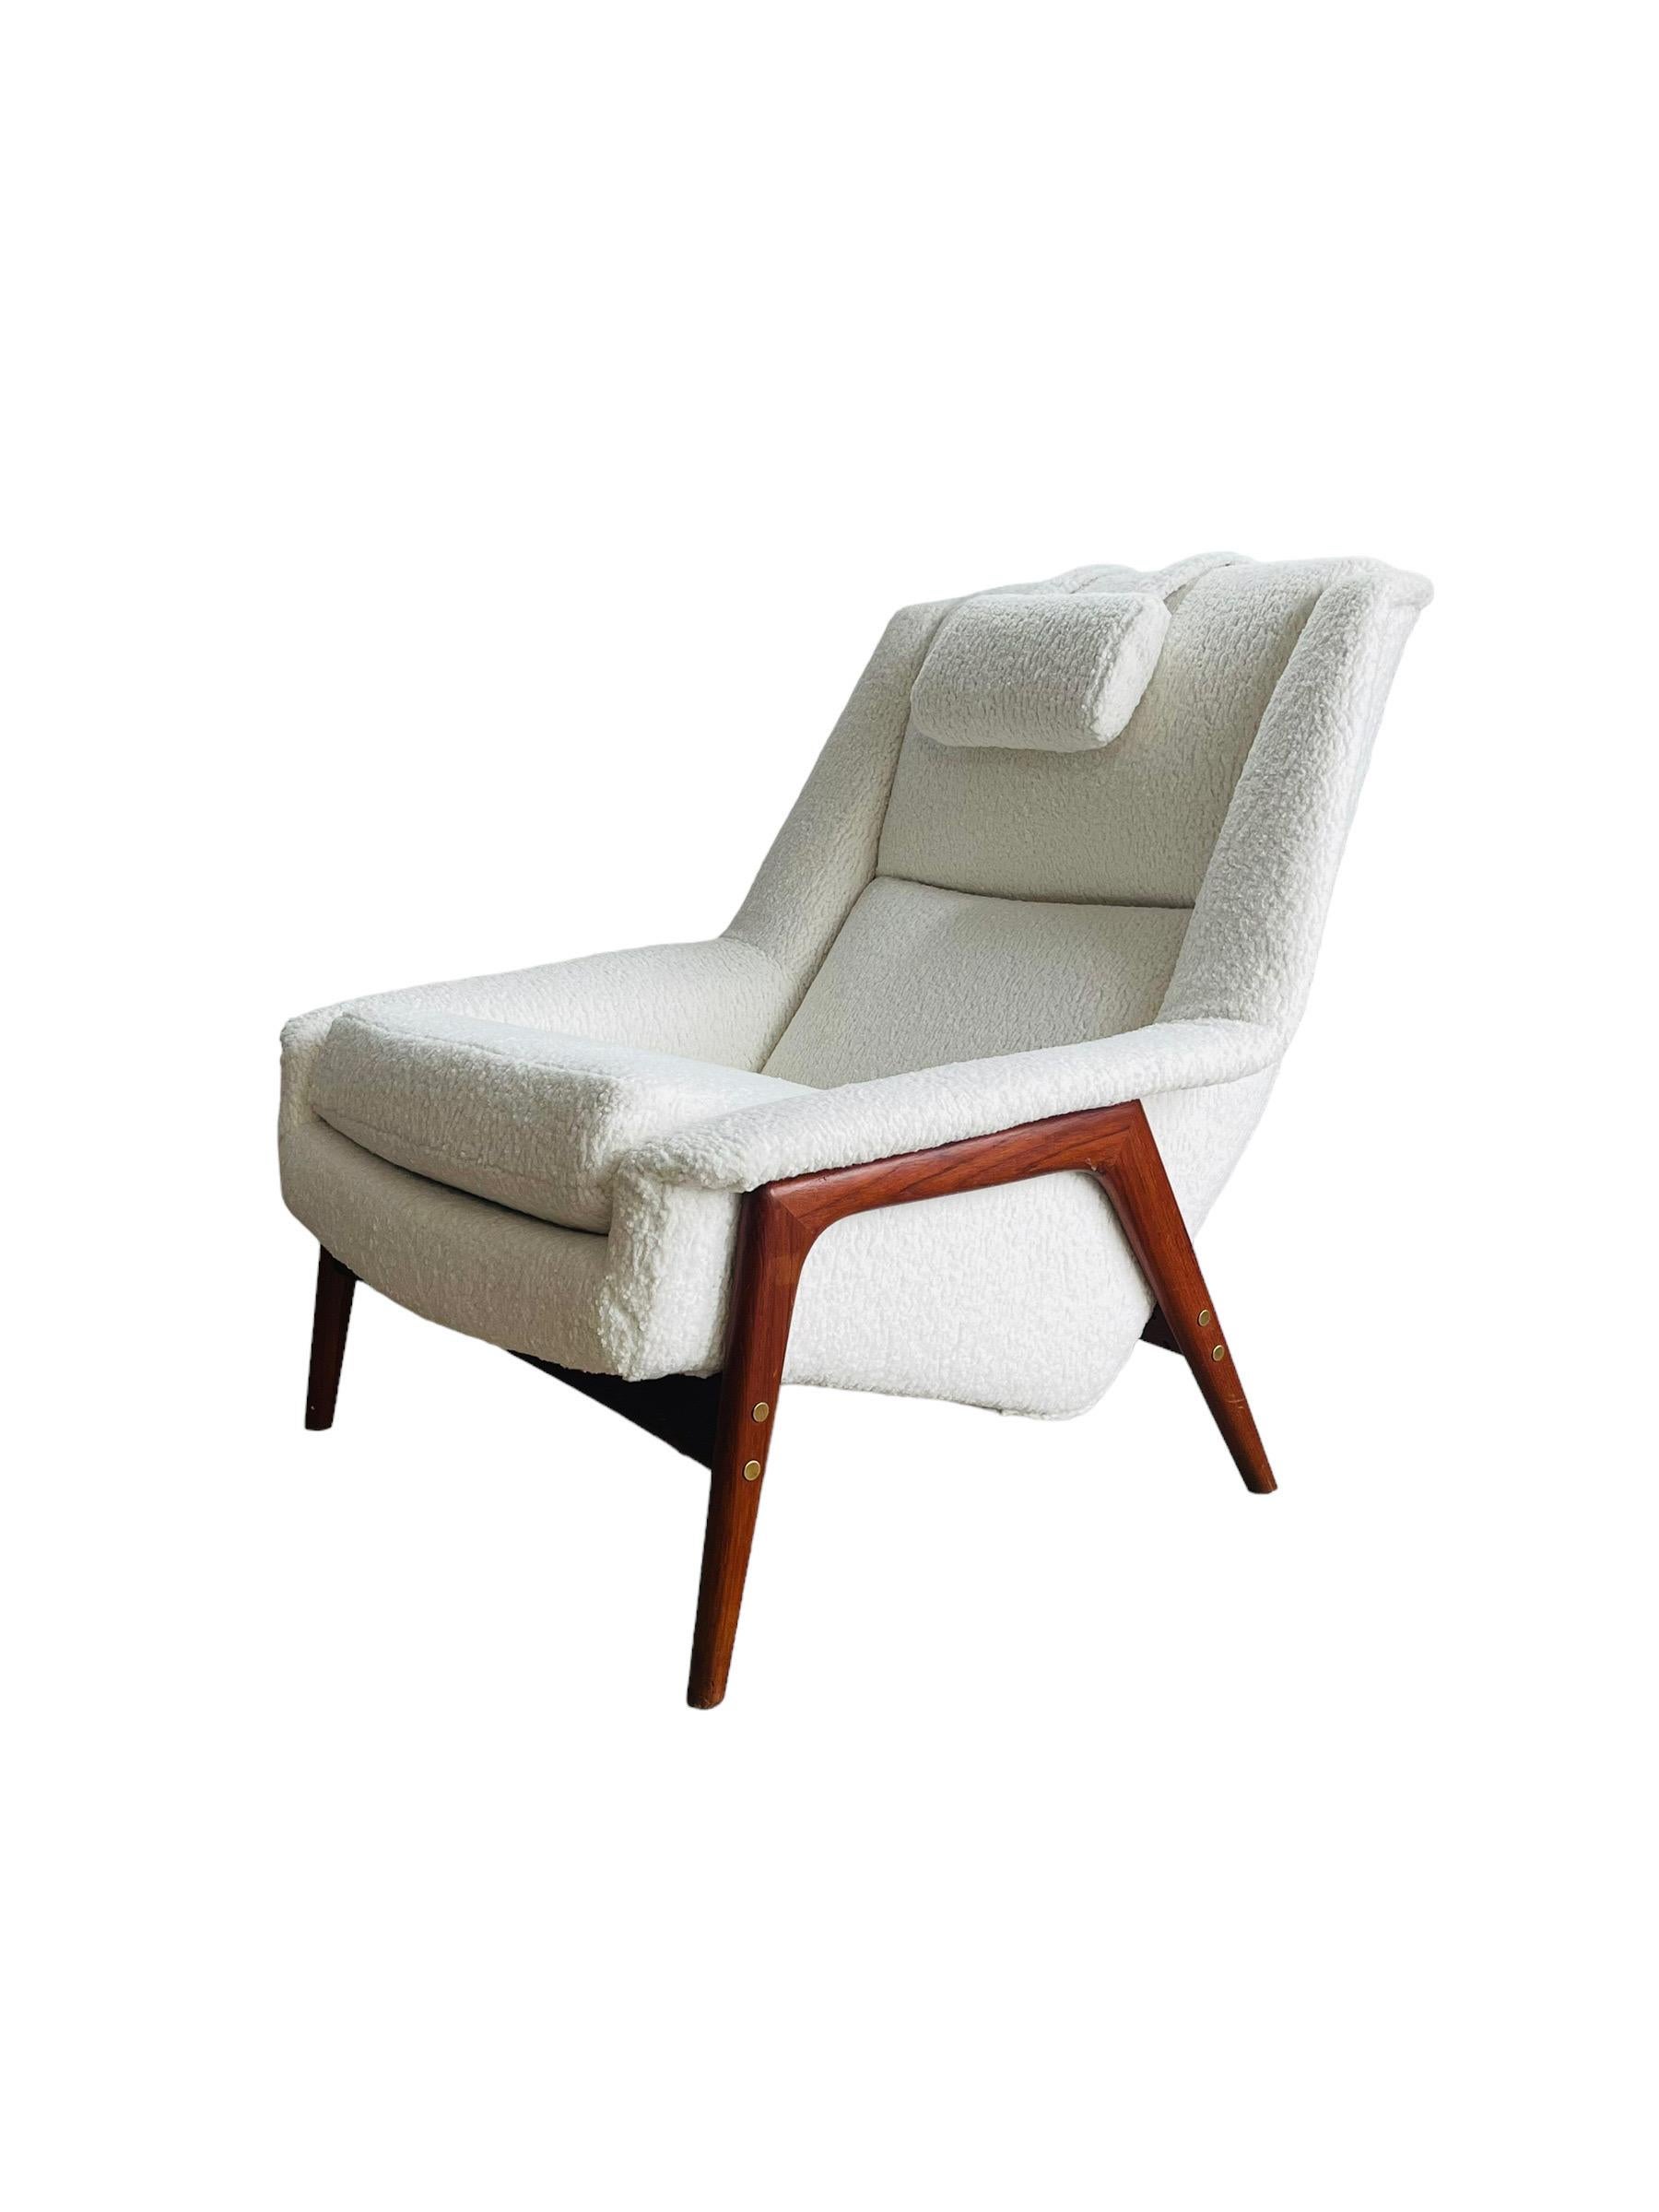 Swedish Folke Ohlsson Lounge Chair for Dux